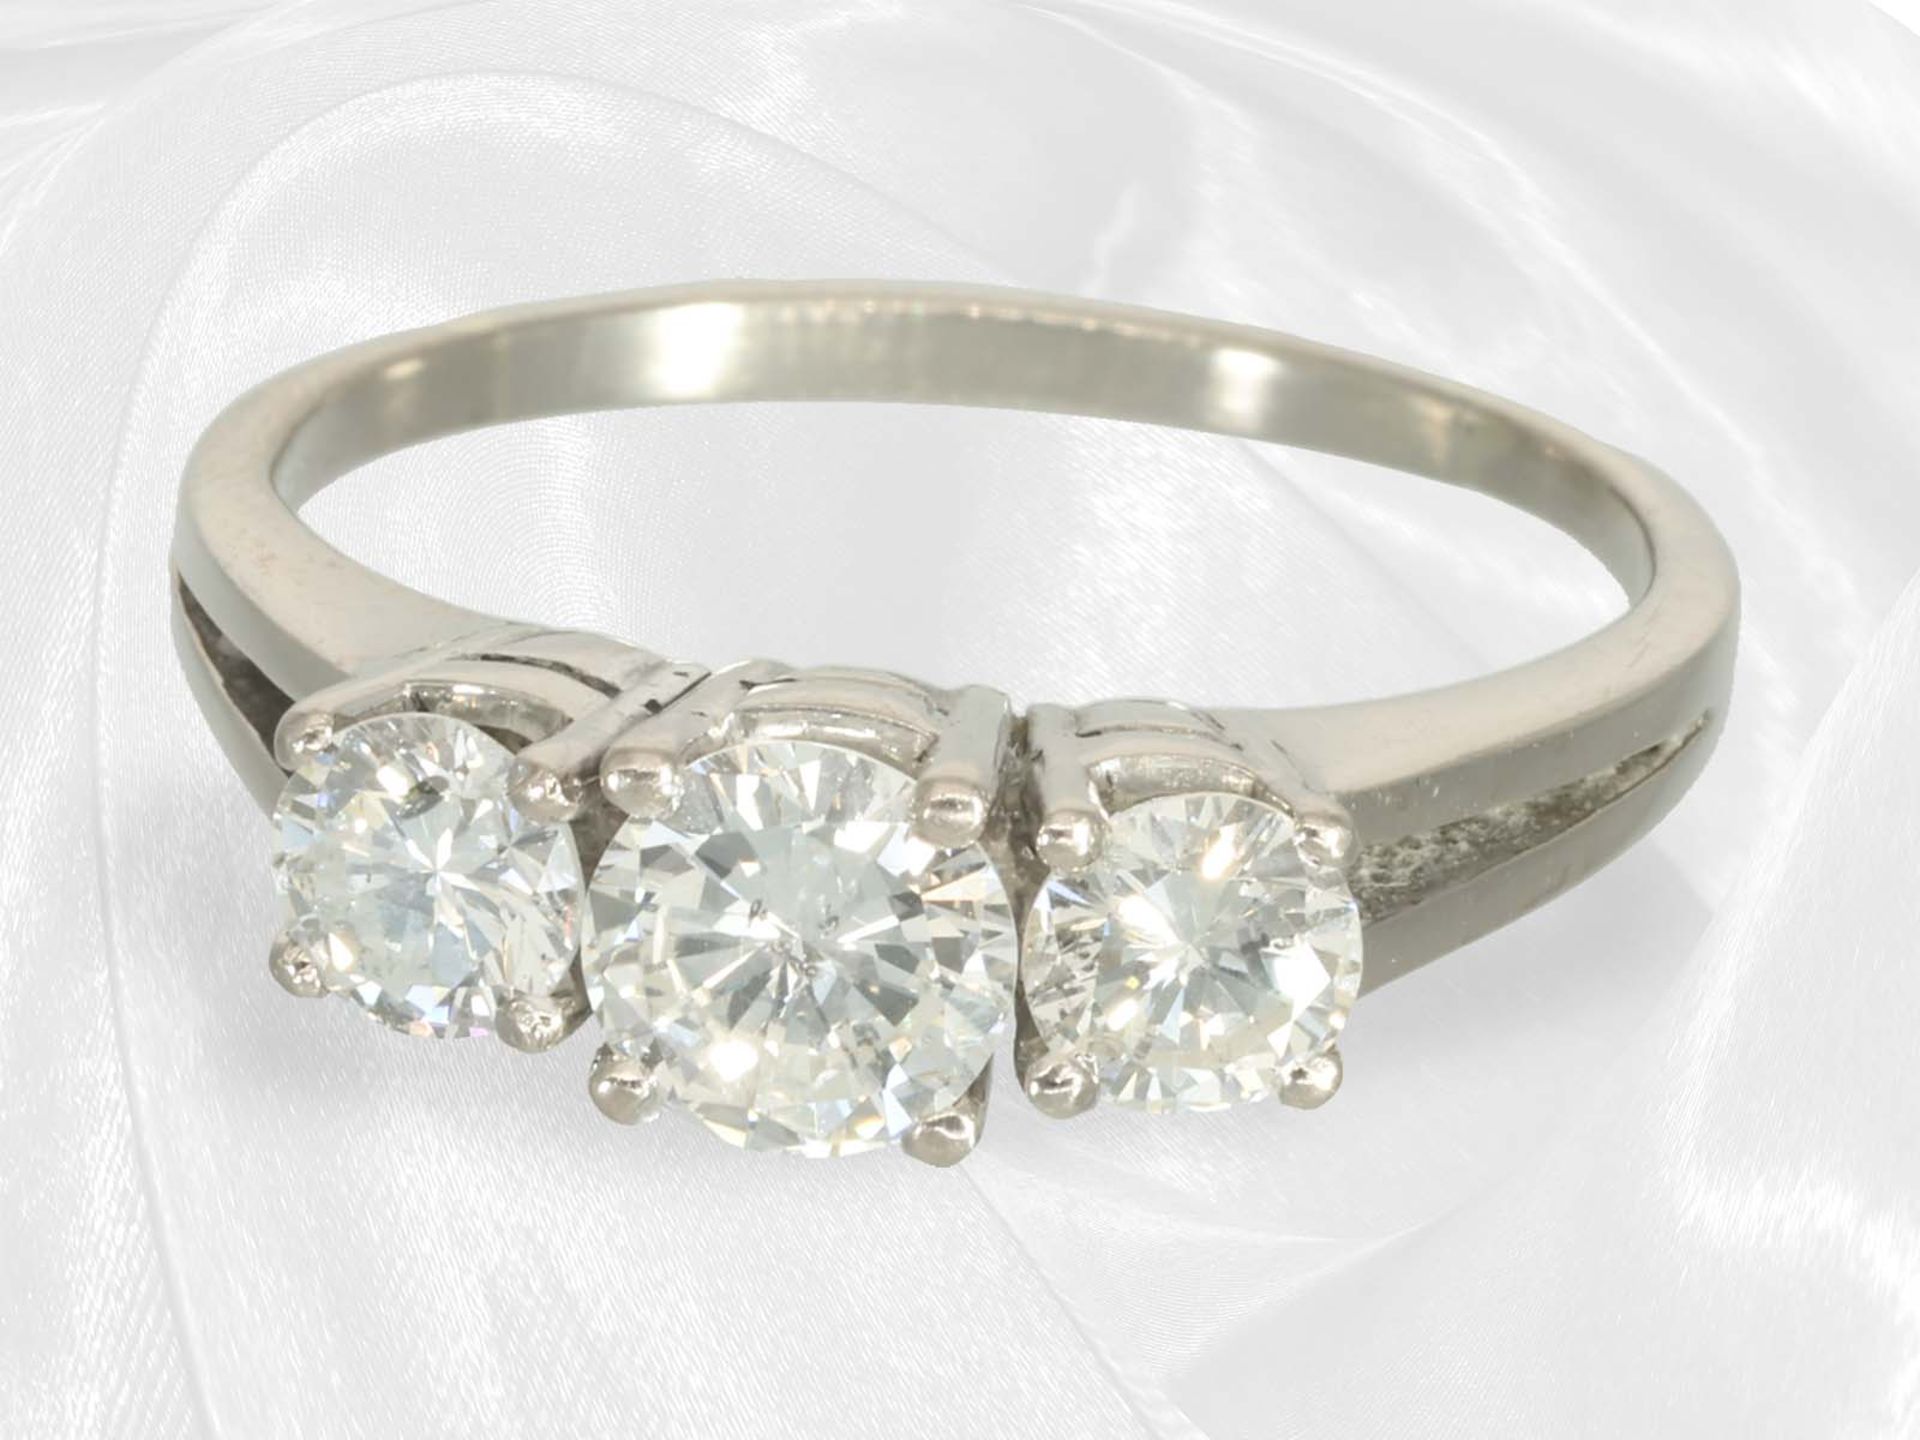 White gold vintage brilliant-cut diamond goldsmith ring, approx. 1.15ct brilliant-cut diamonds - Image 3 of 4